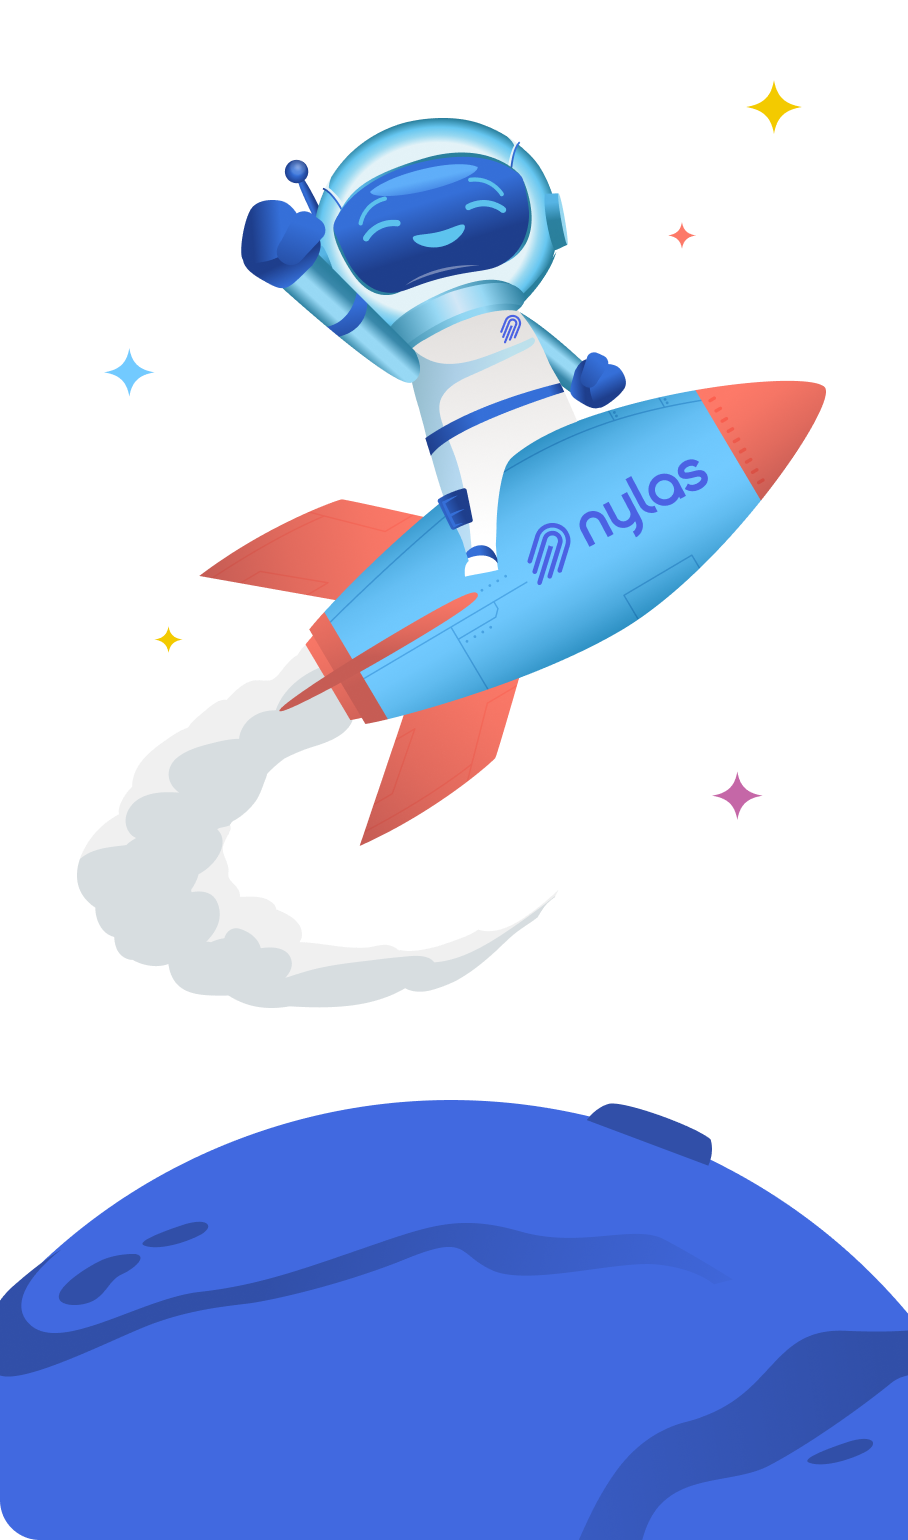 Nyla riding a rocket